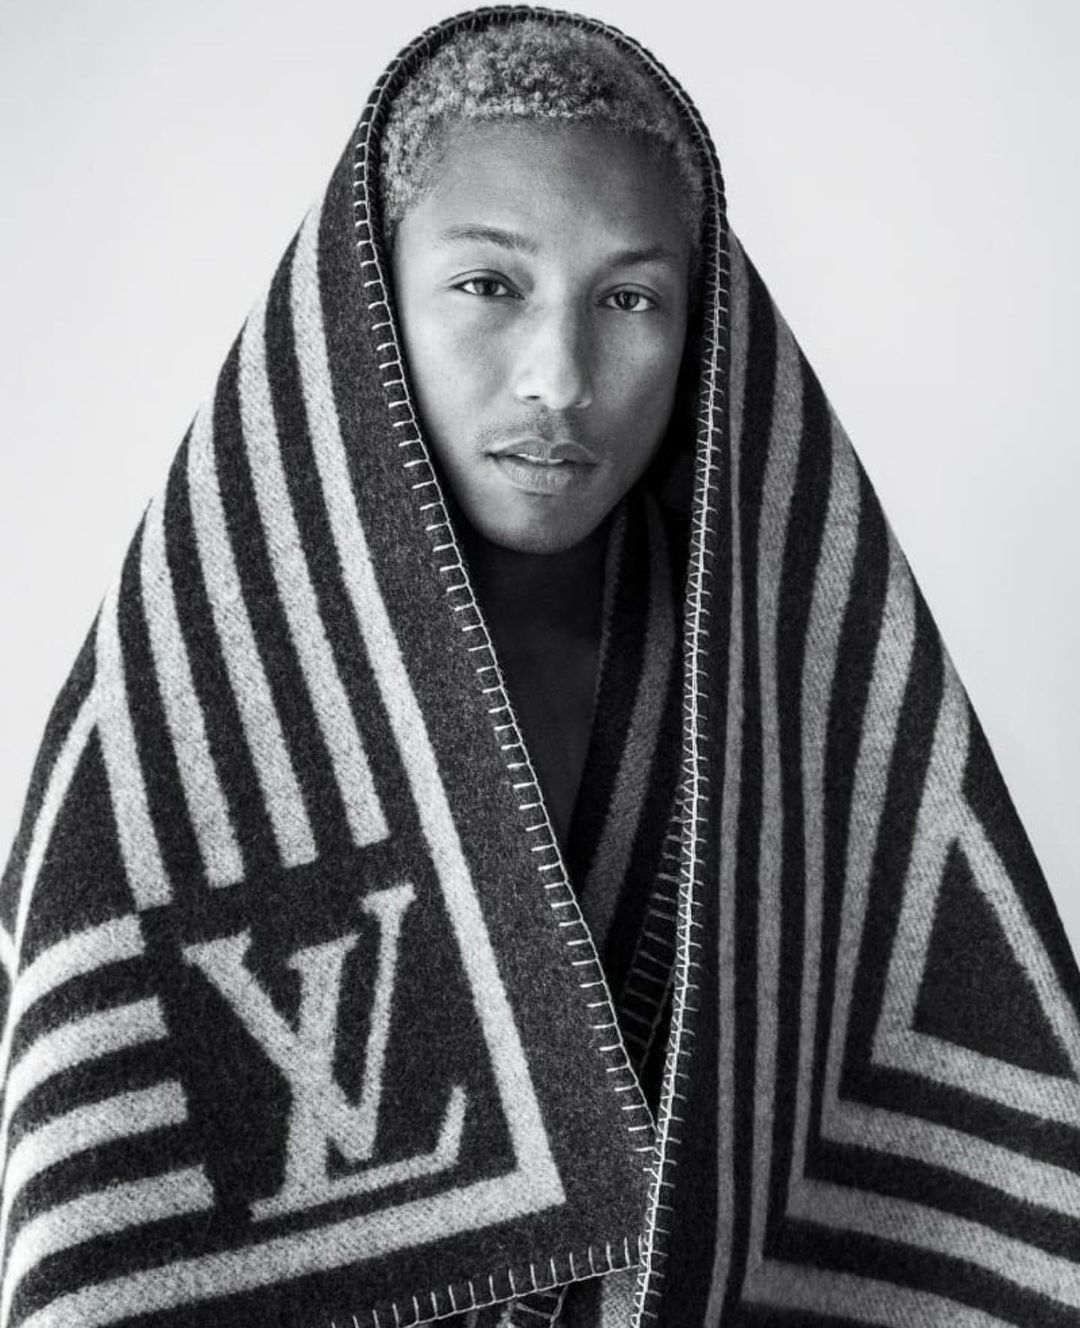 Pharrell Williams as creative director of Louis Vuitton